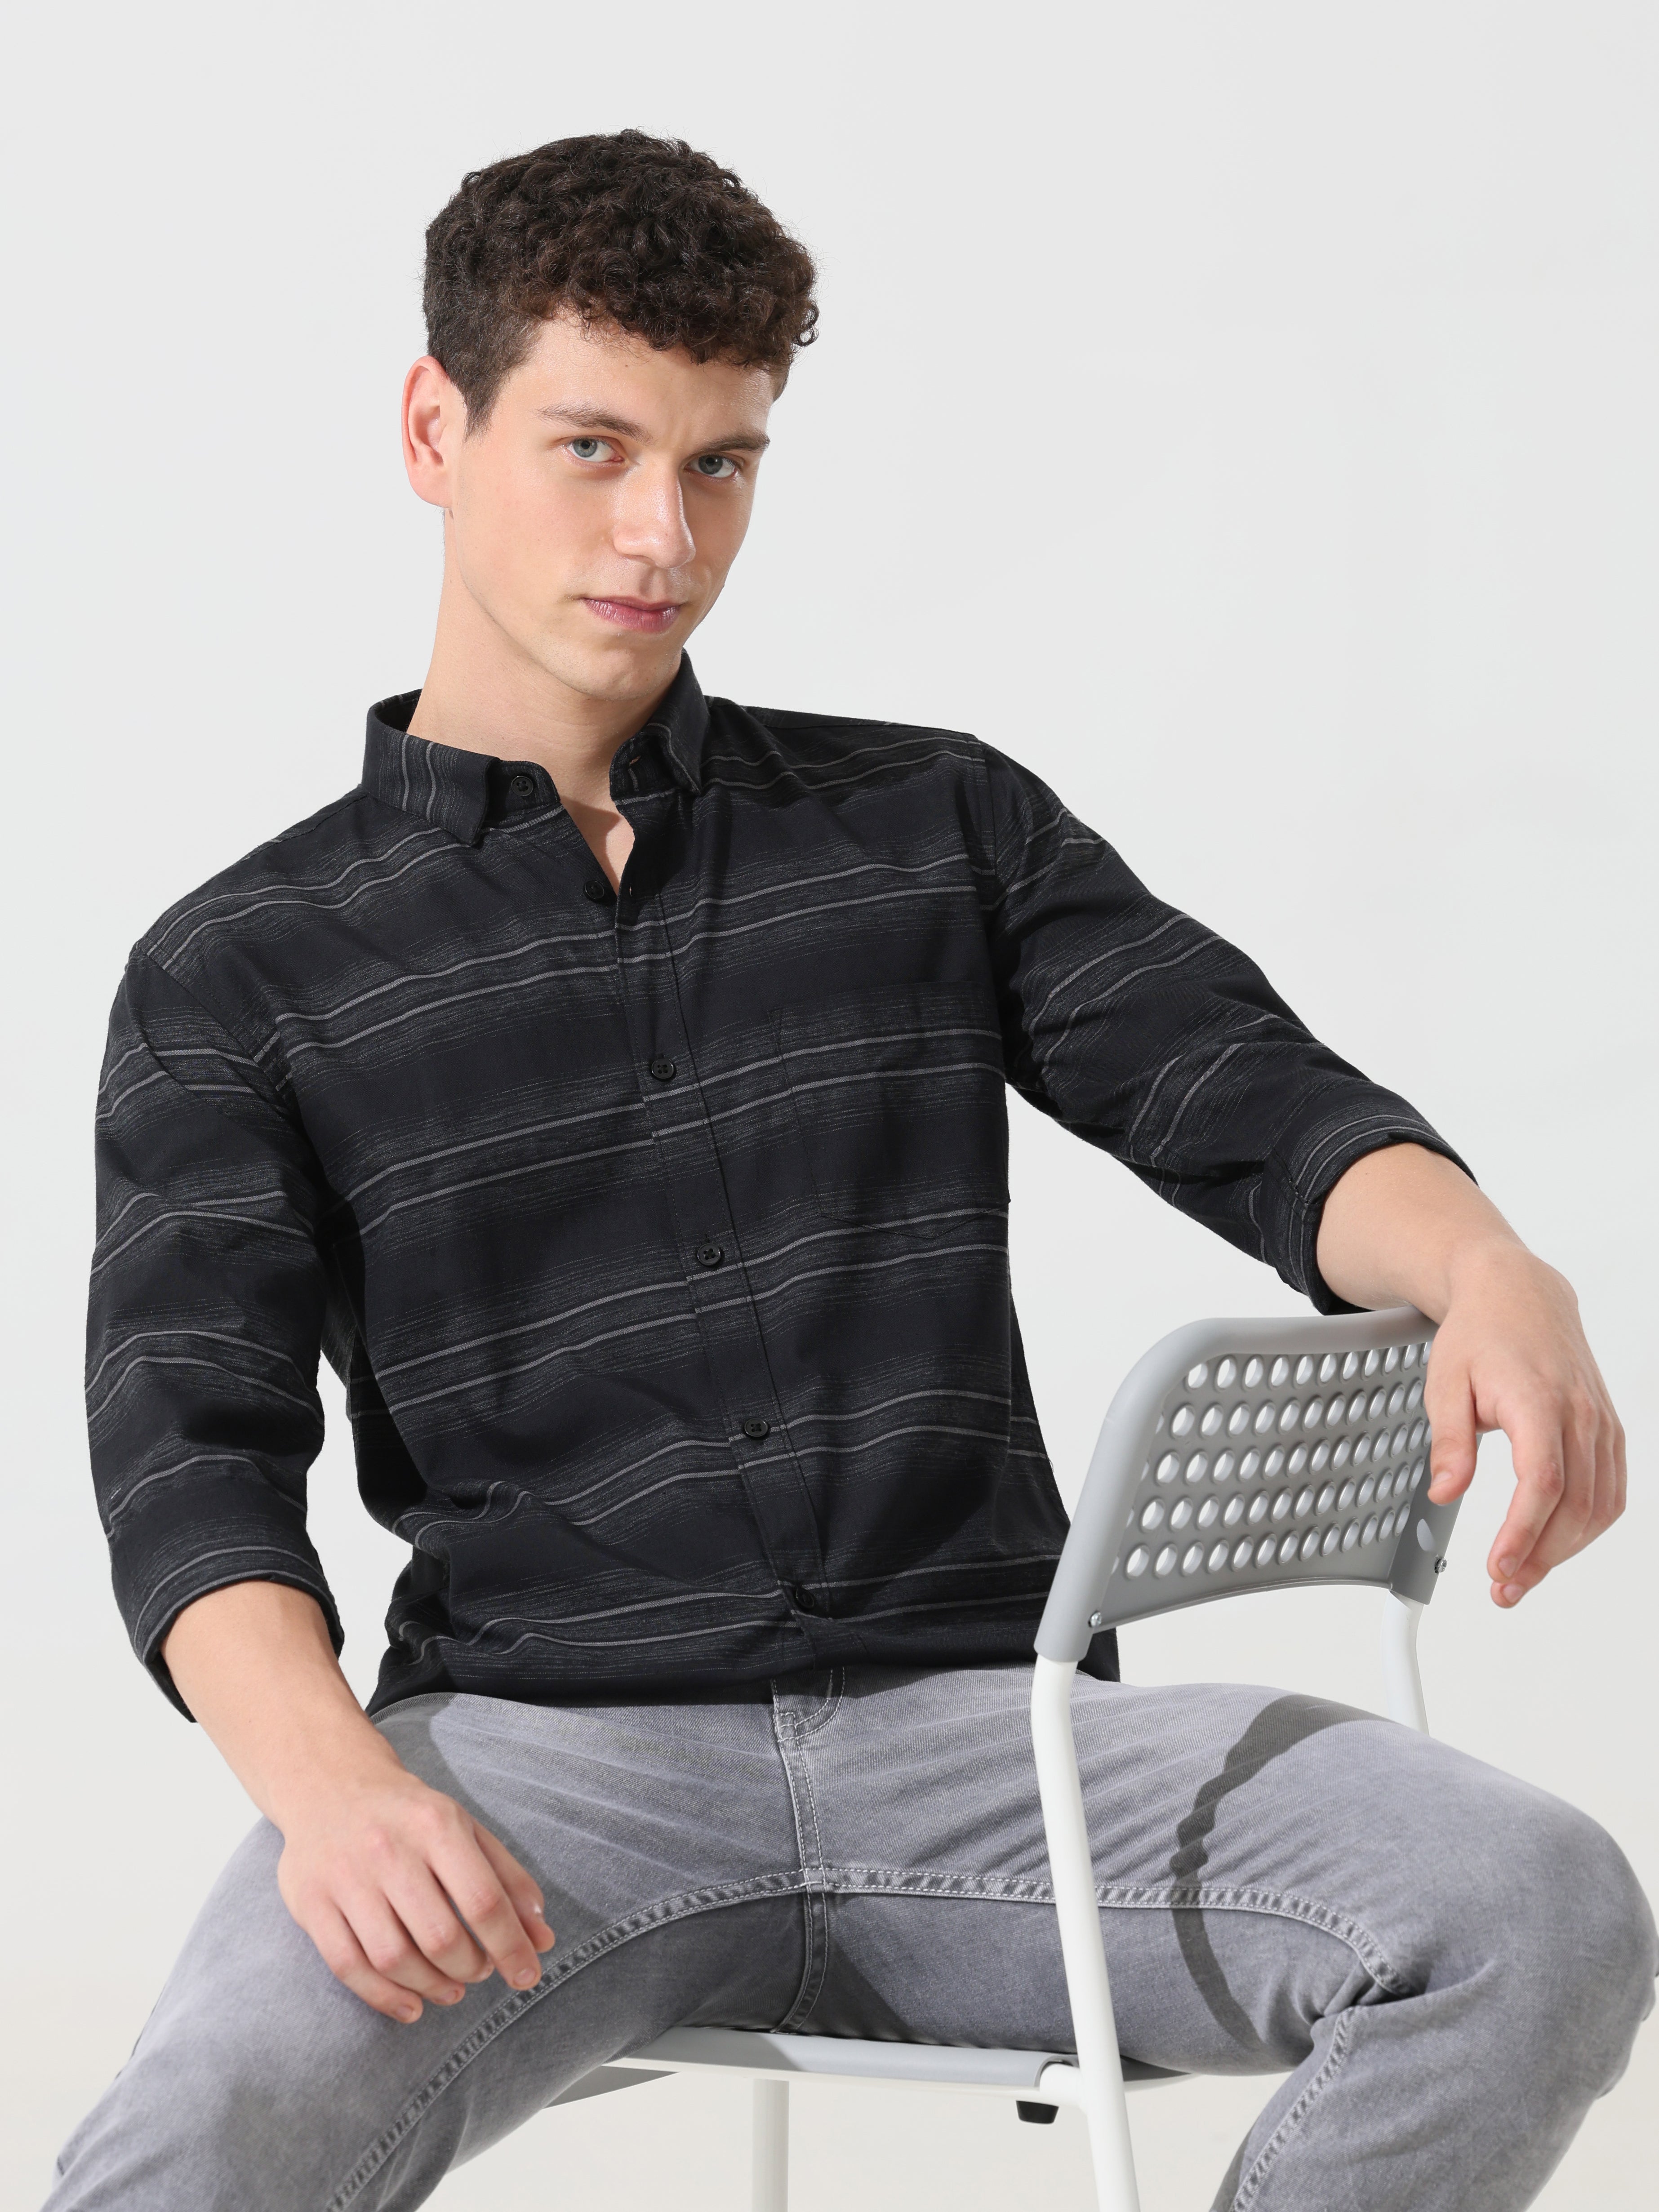 Black stripe slim fit shirts - Address pro